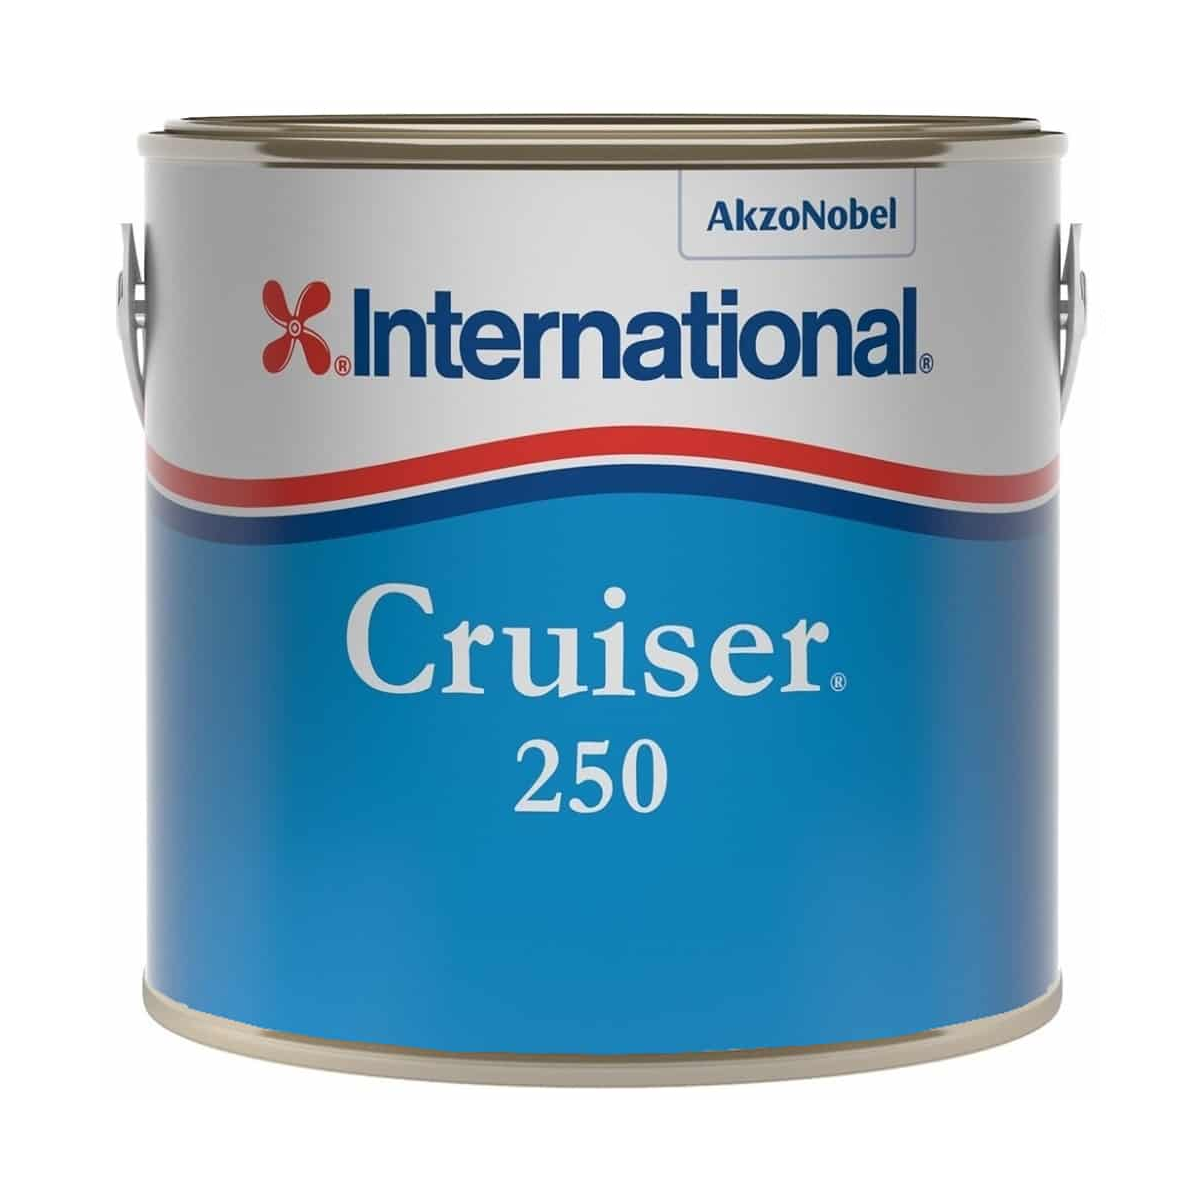 Cruiser 250